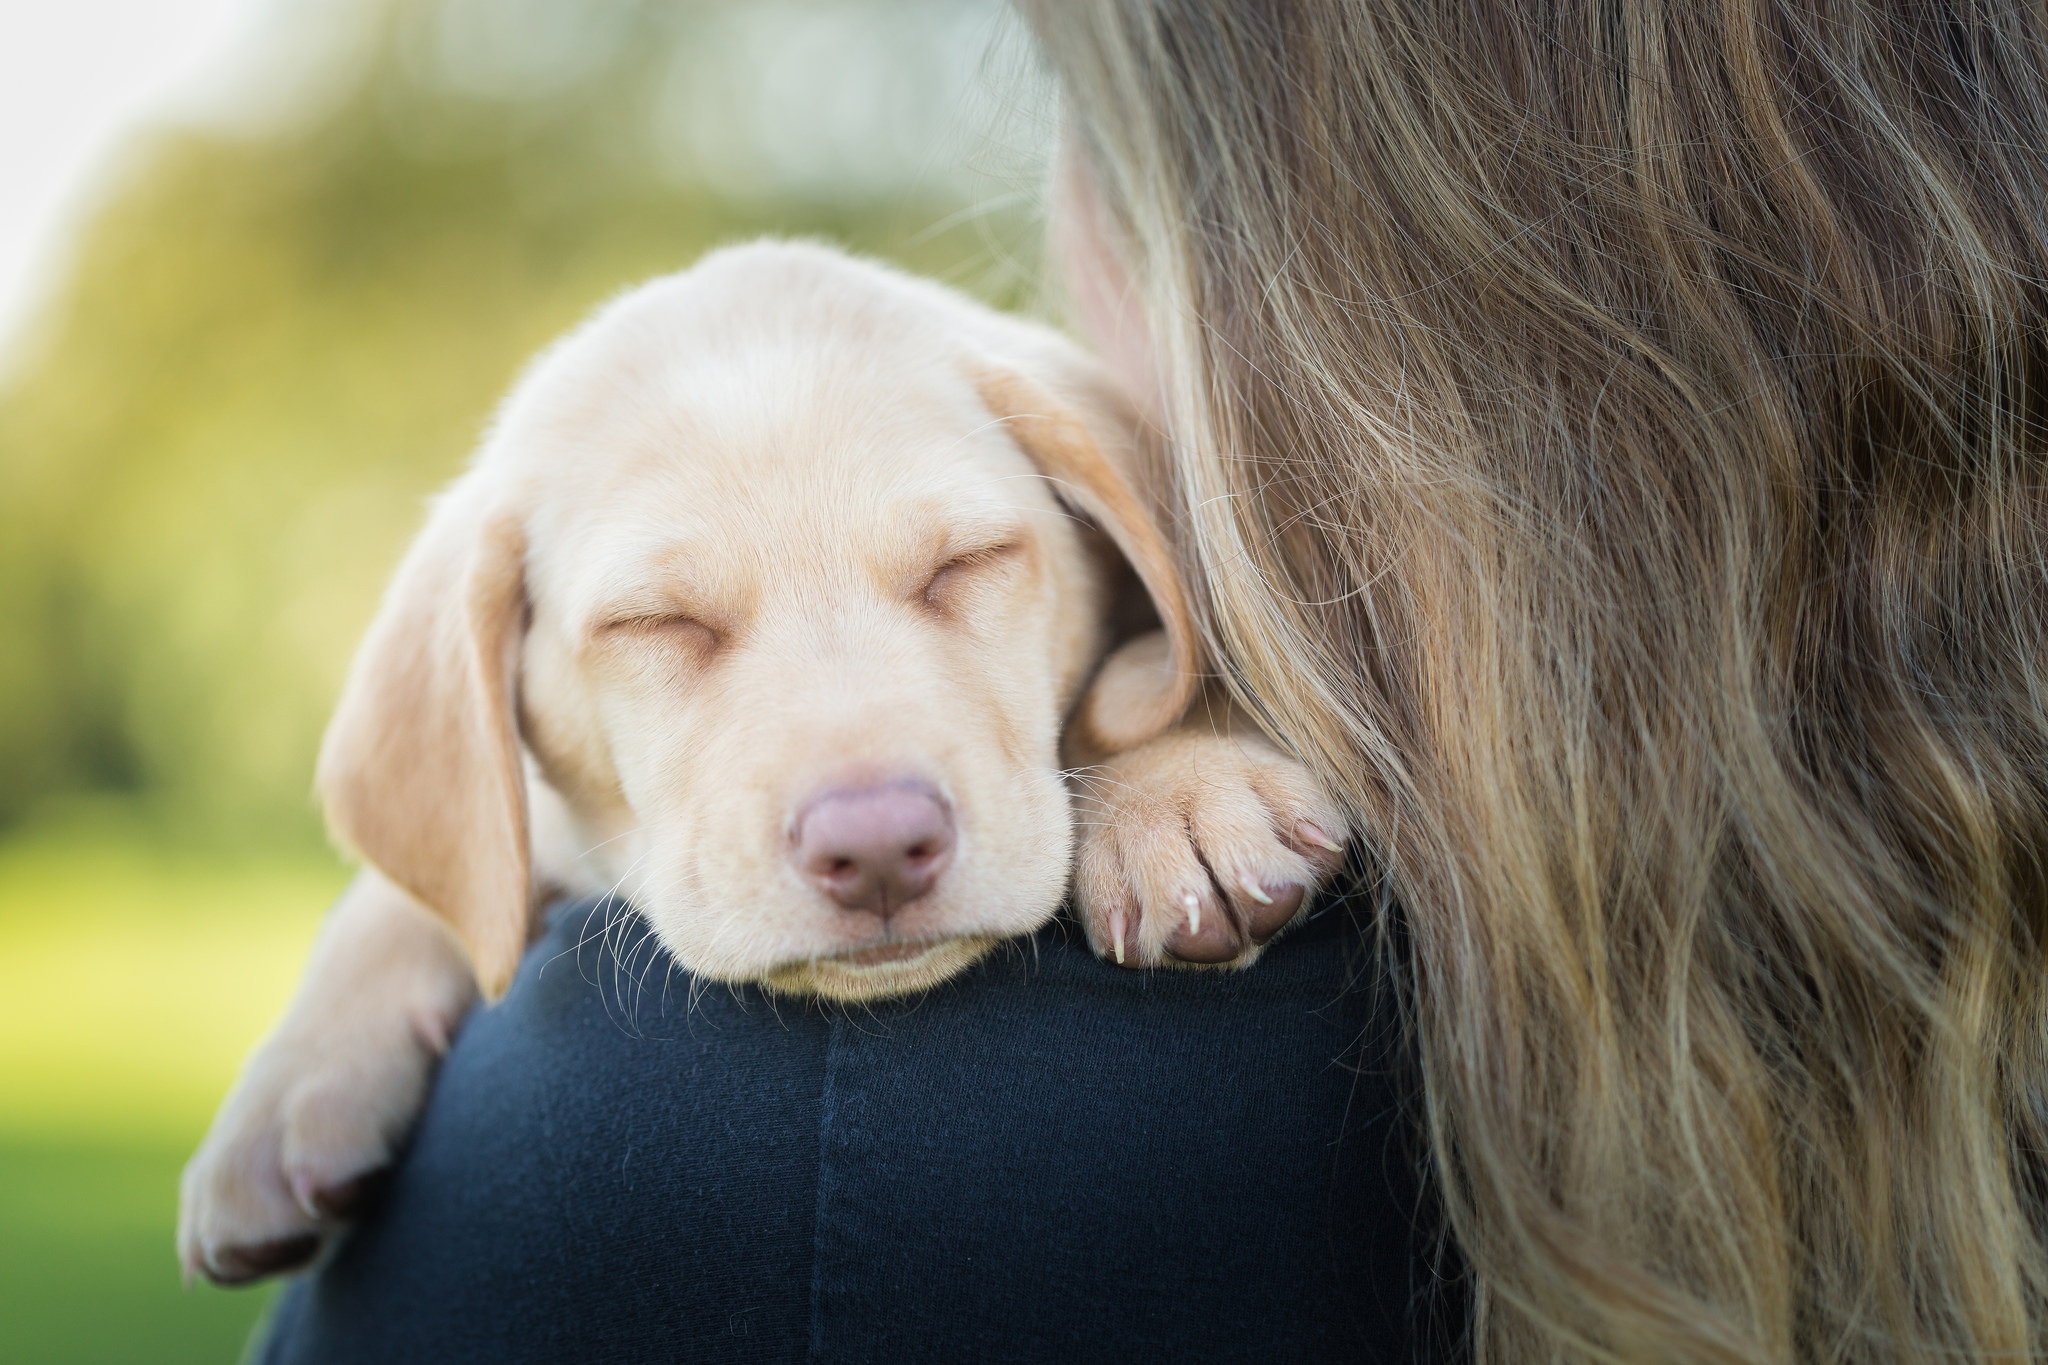 Cute Labrador Puppy Asleep on a Woman's Shoulder